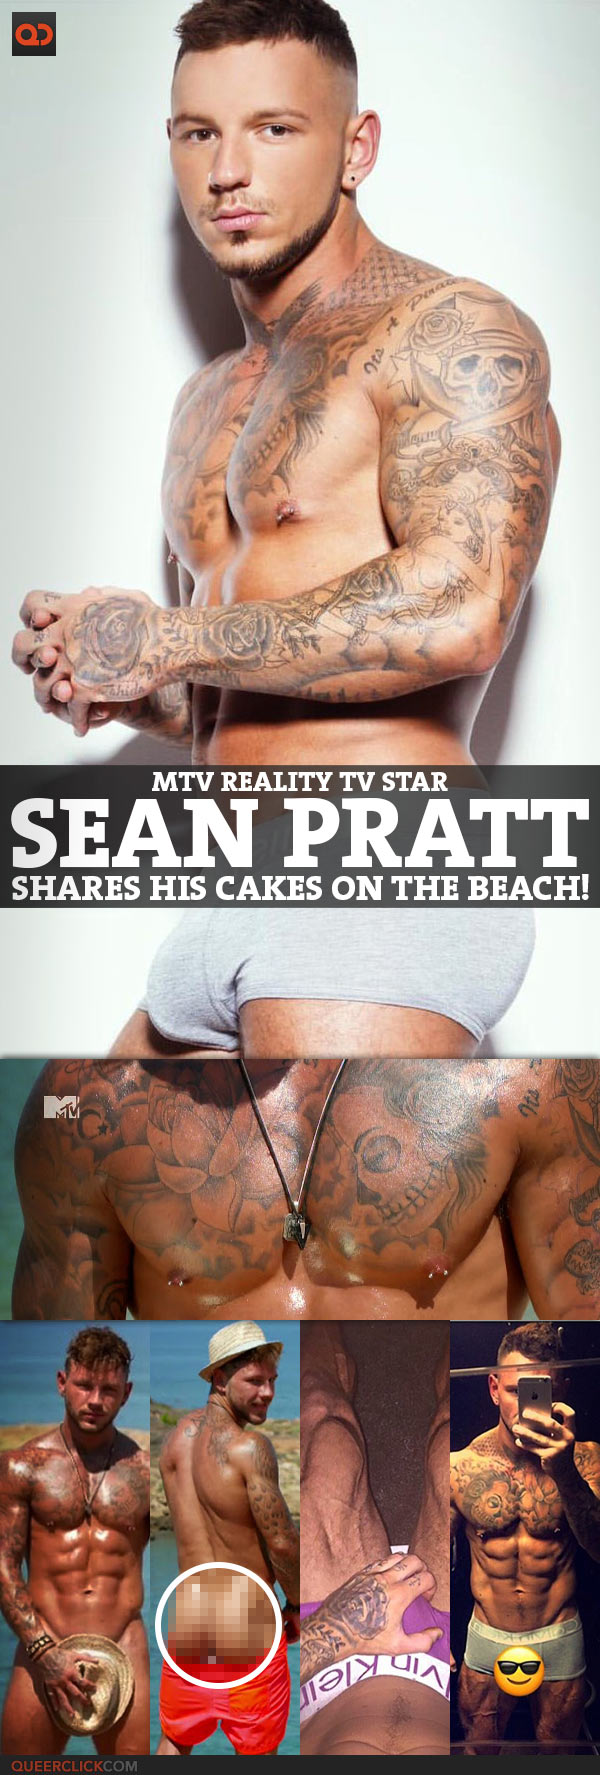 Sean Pratt, MTV Reality TV Star, Shares His Cakes On The Beach!